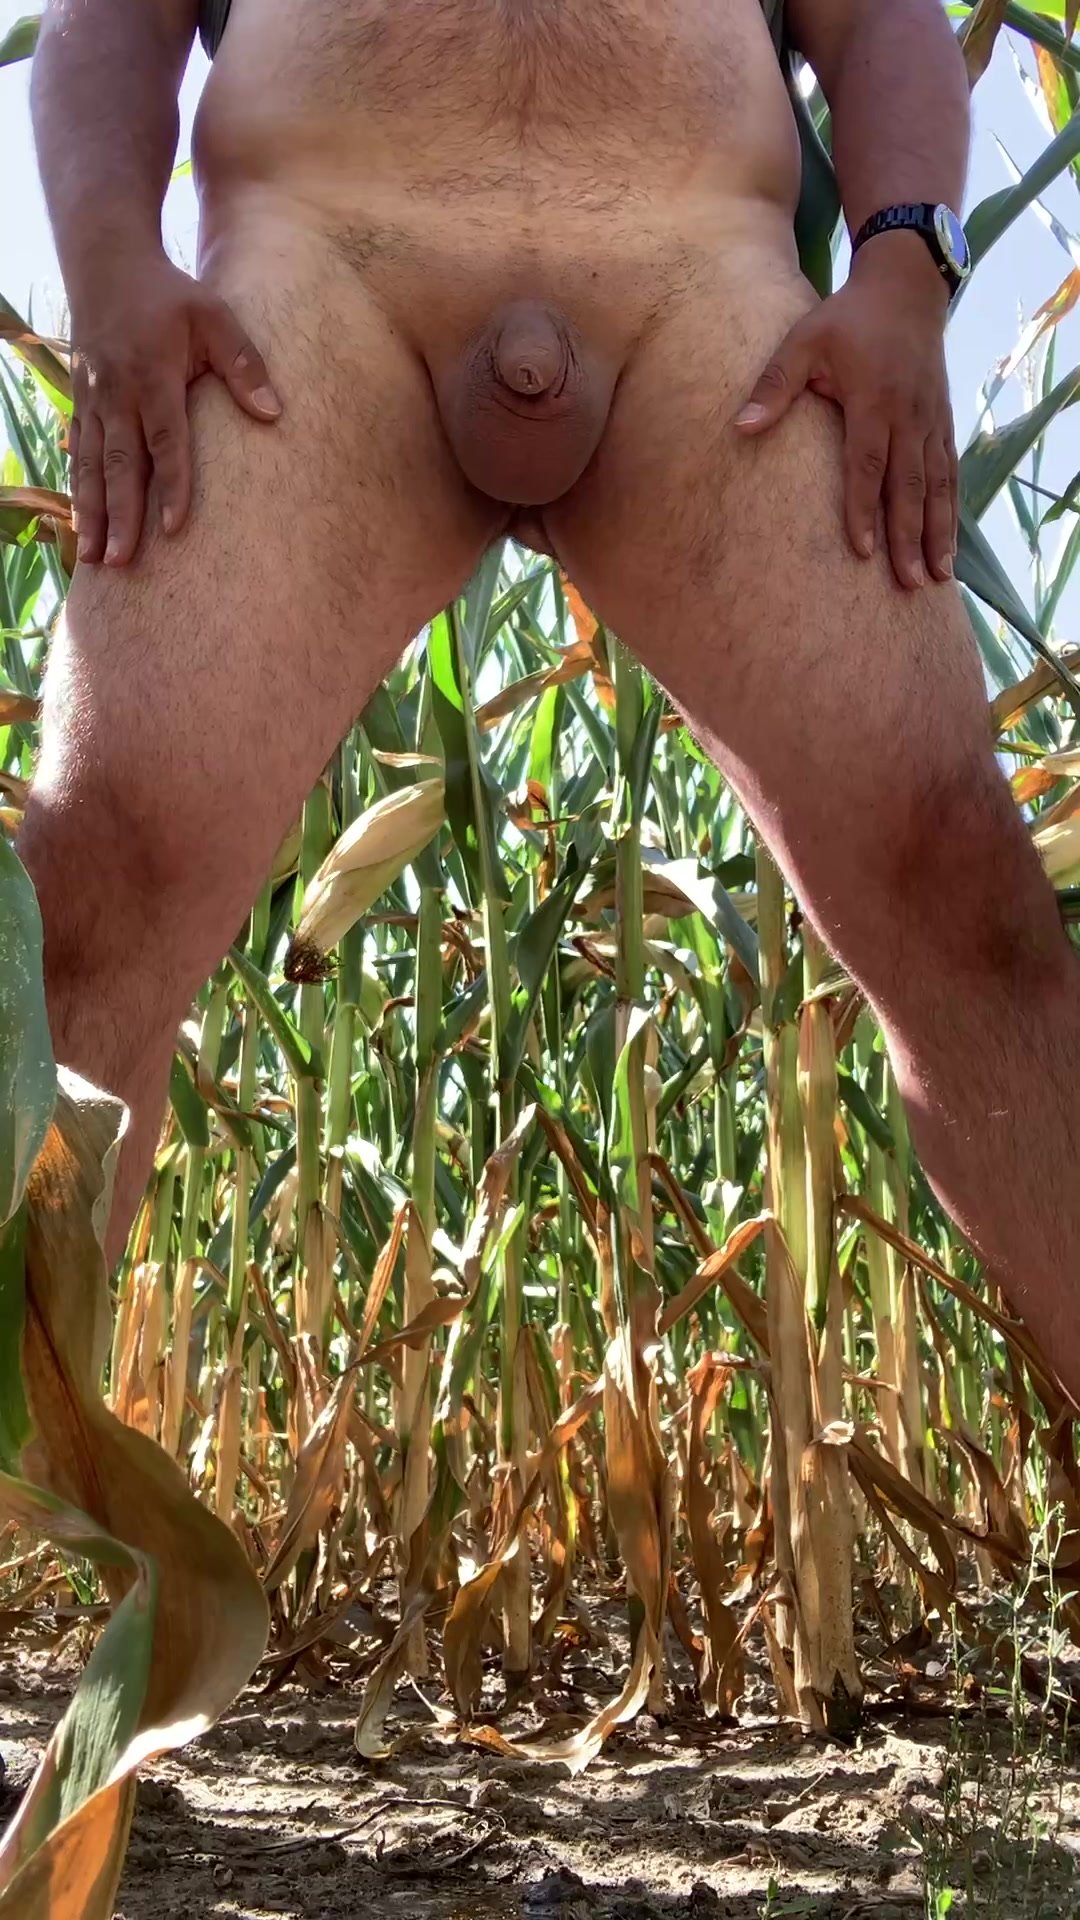 Pee in the cornfield